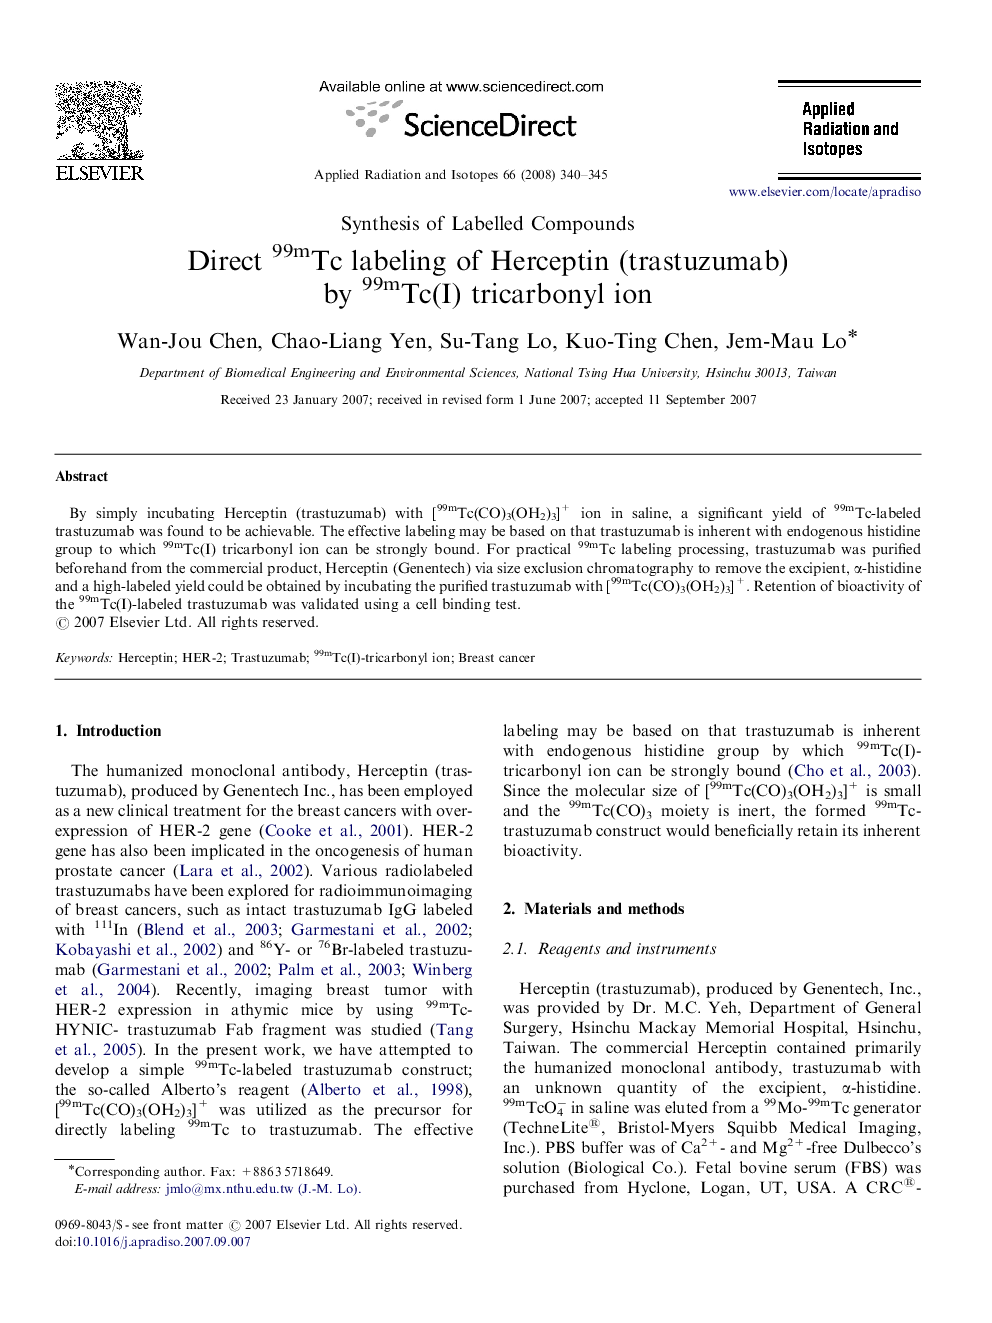 Direct 99mTc labeling of Herceptin (trastuzumab) by 99mTc(I) tricarbonyl ion